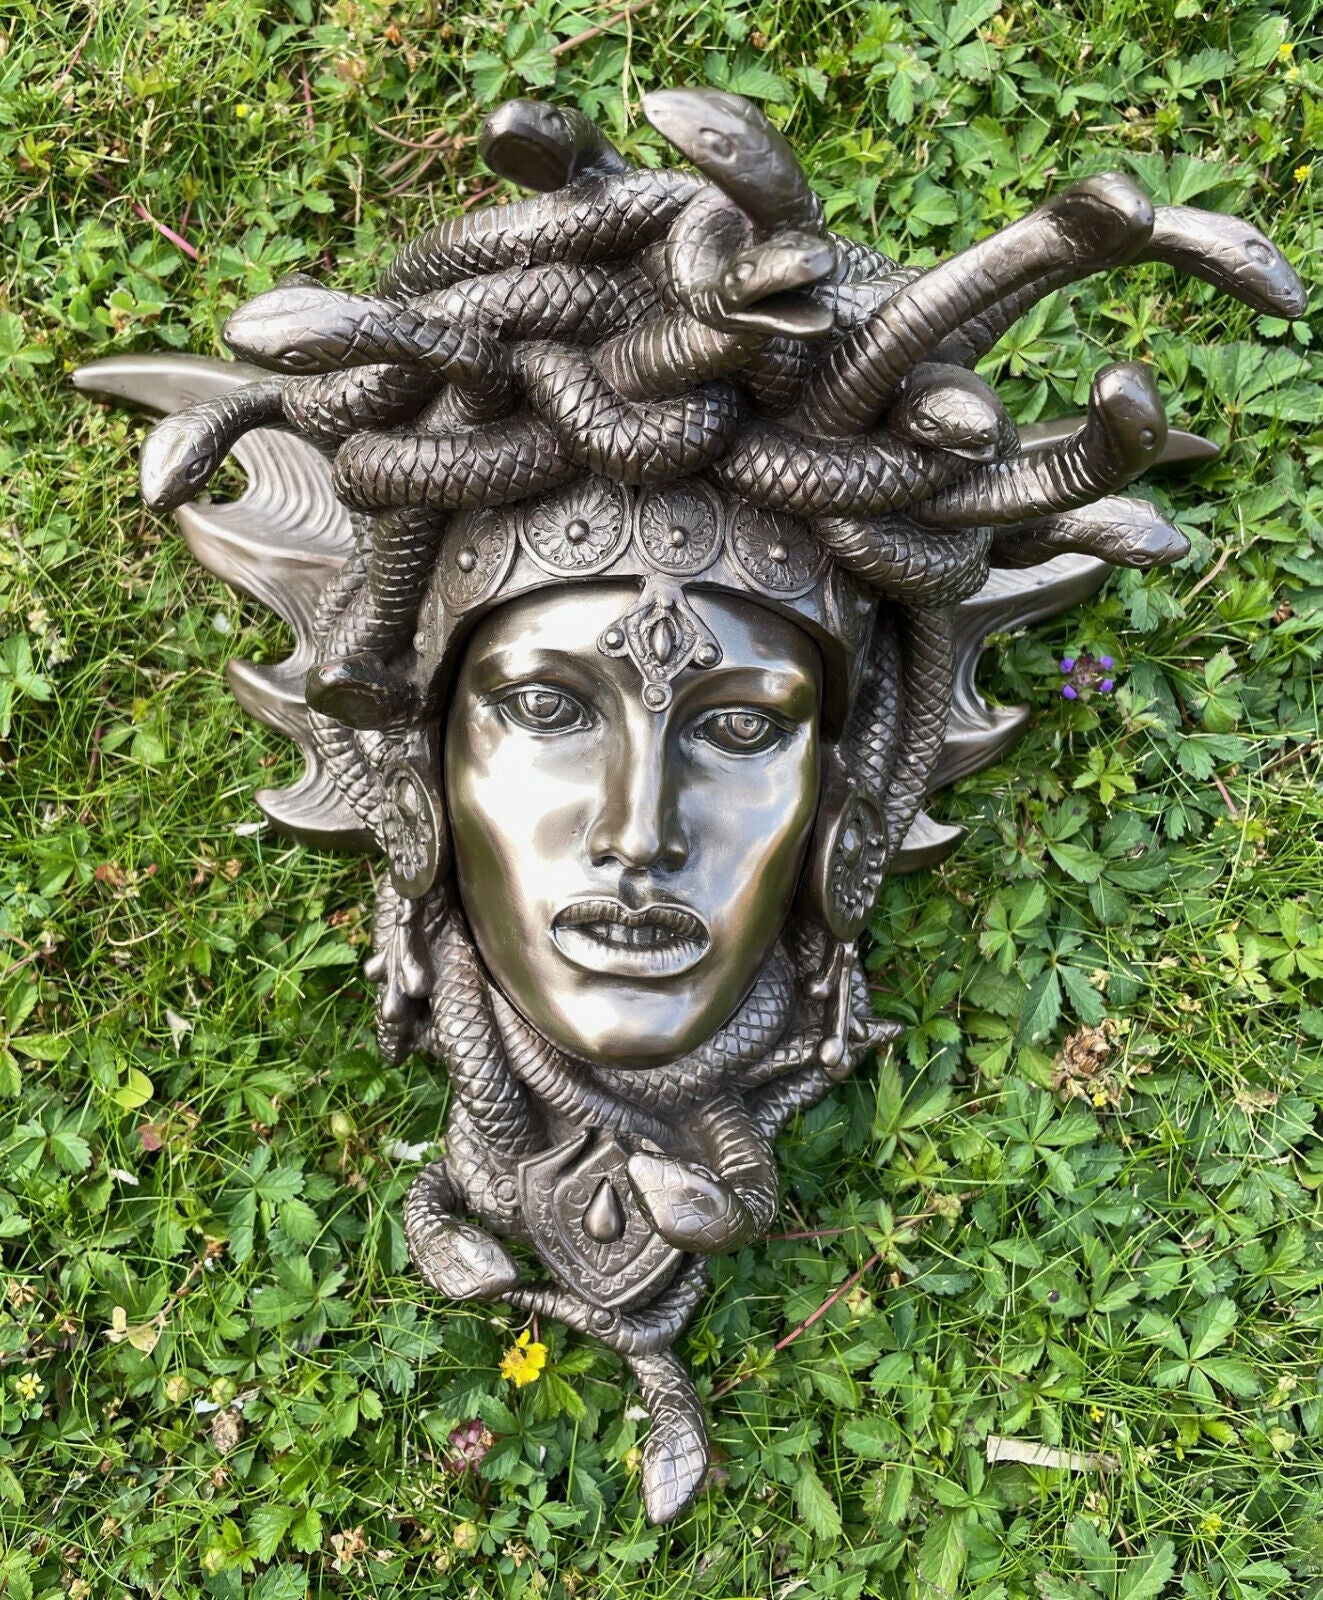 Medusa Head Wall Plaque Sculpture In Cold Cast Bronze